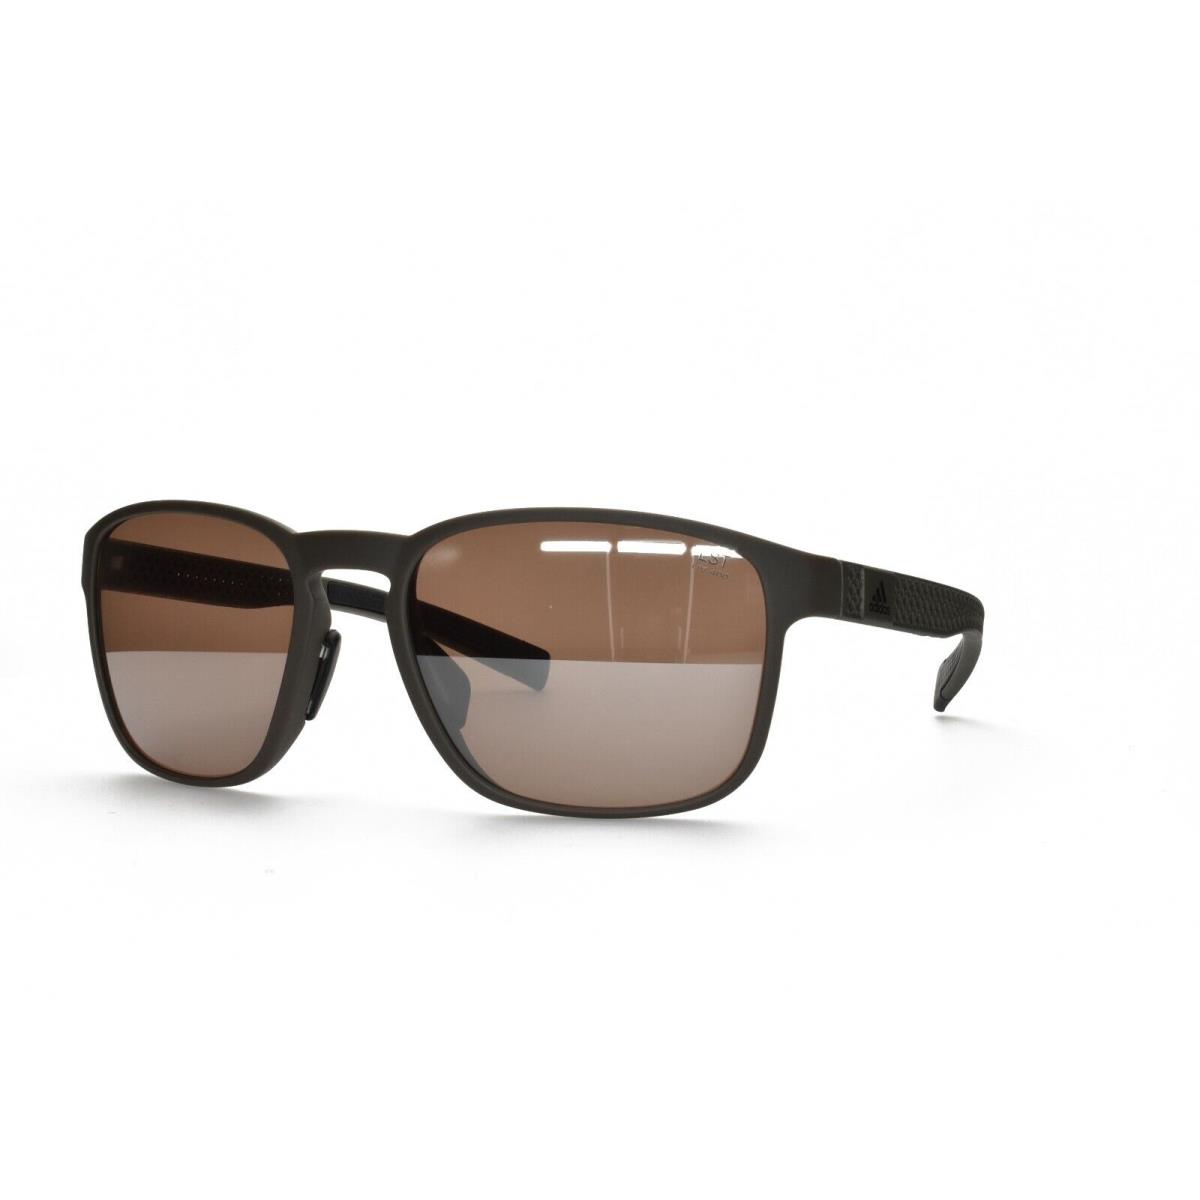 Adidas Sunglasses by Silhouette 3D Print Frame Protean 36 75 5500 56 X Khaki